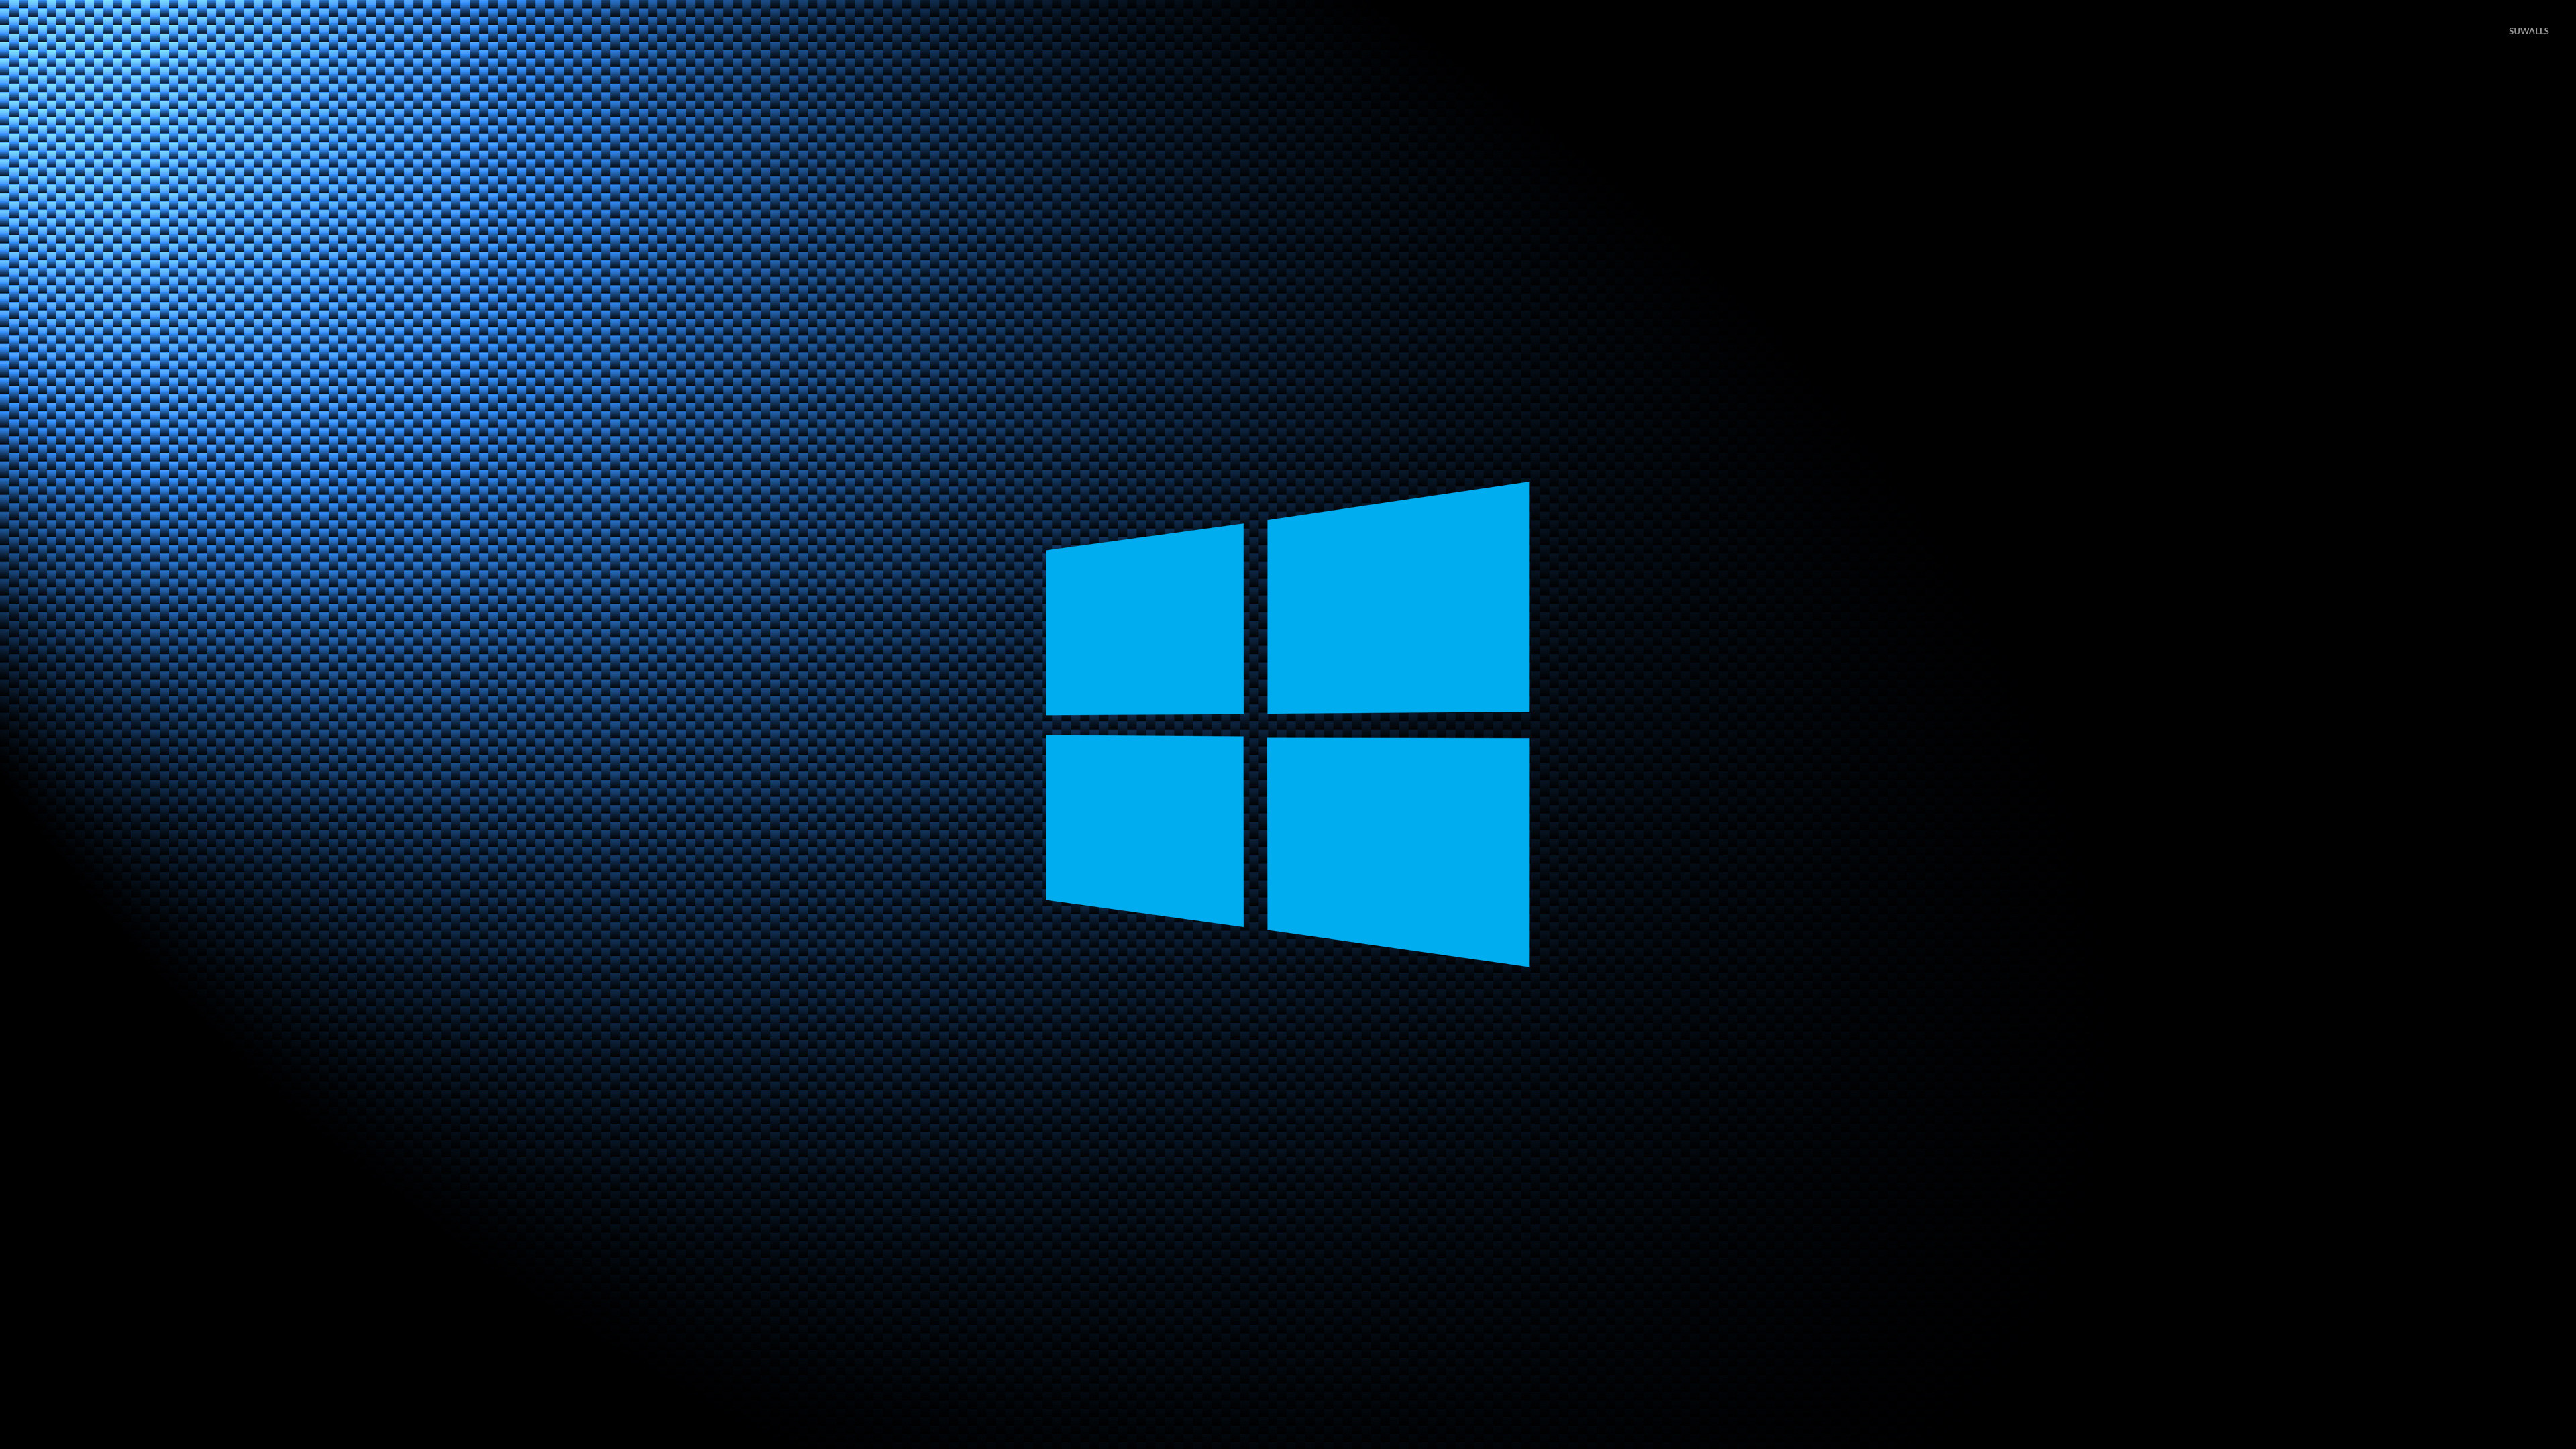 3840x2160 Windows 10 simple blue logo on carbon fiber wallpaper